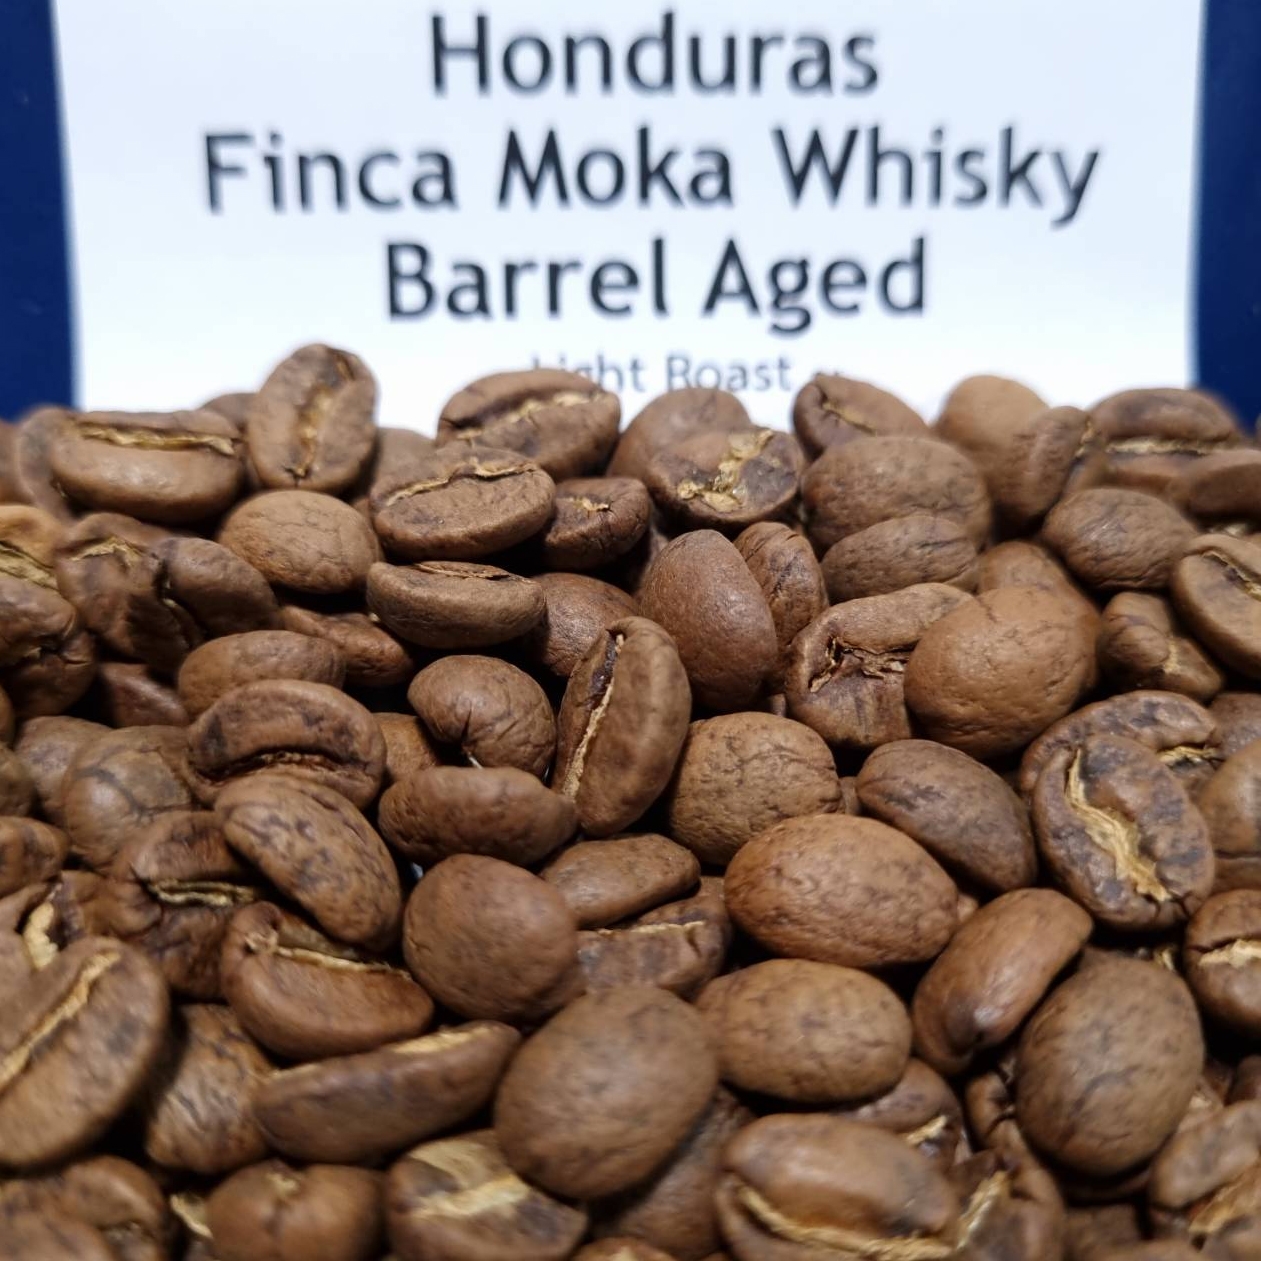 Honduras Finca Moka Whisky Barrel Aged